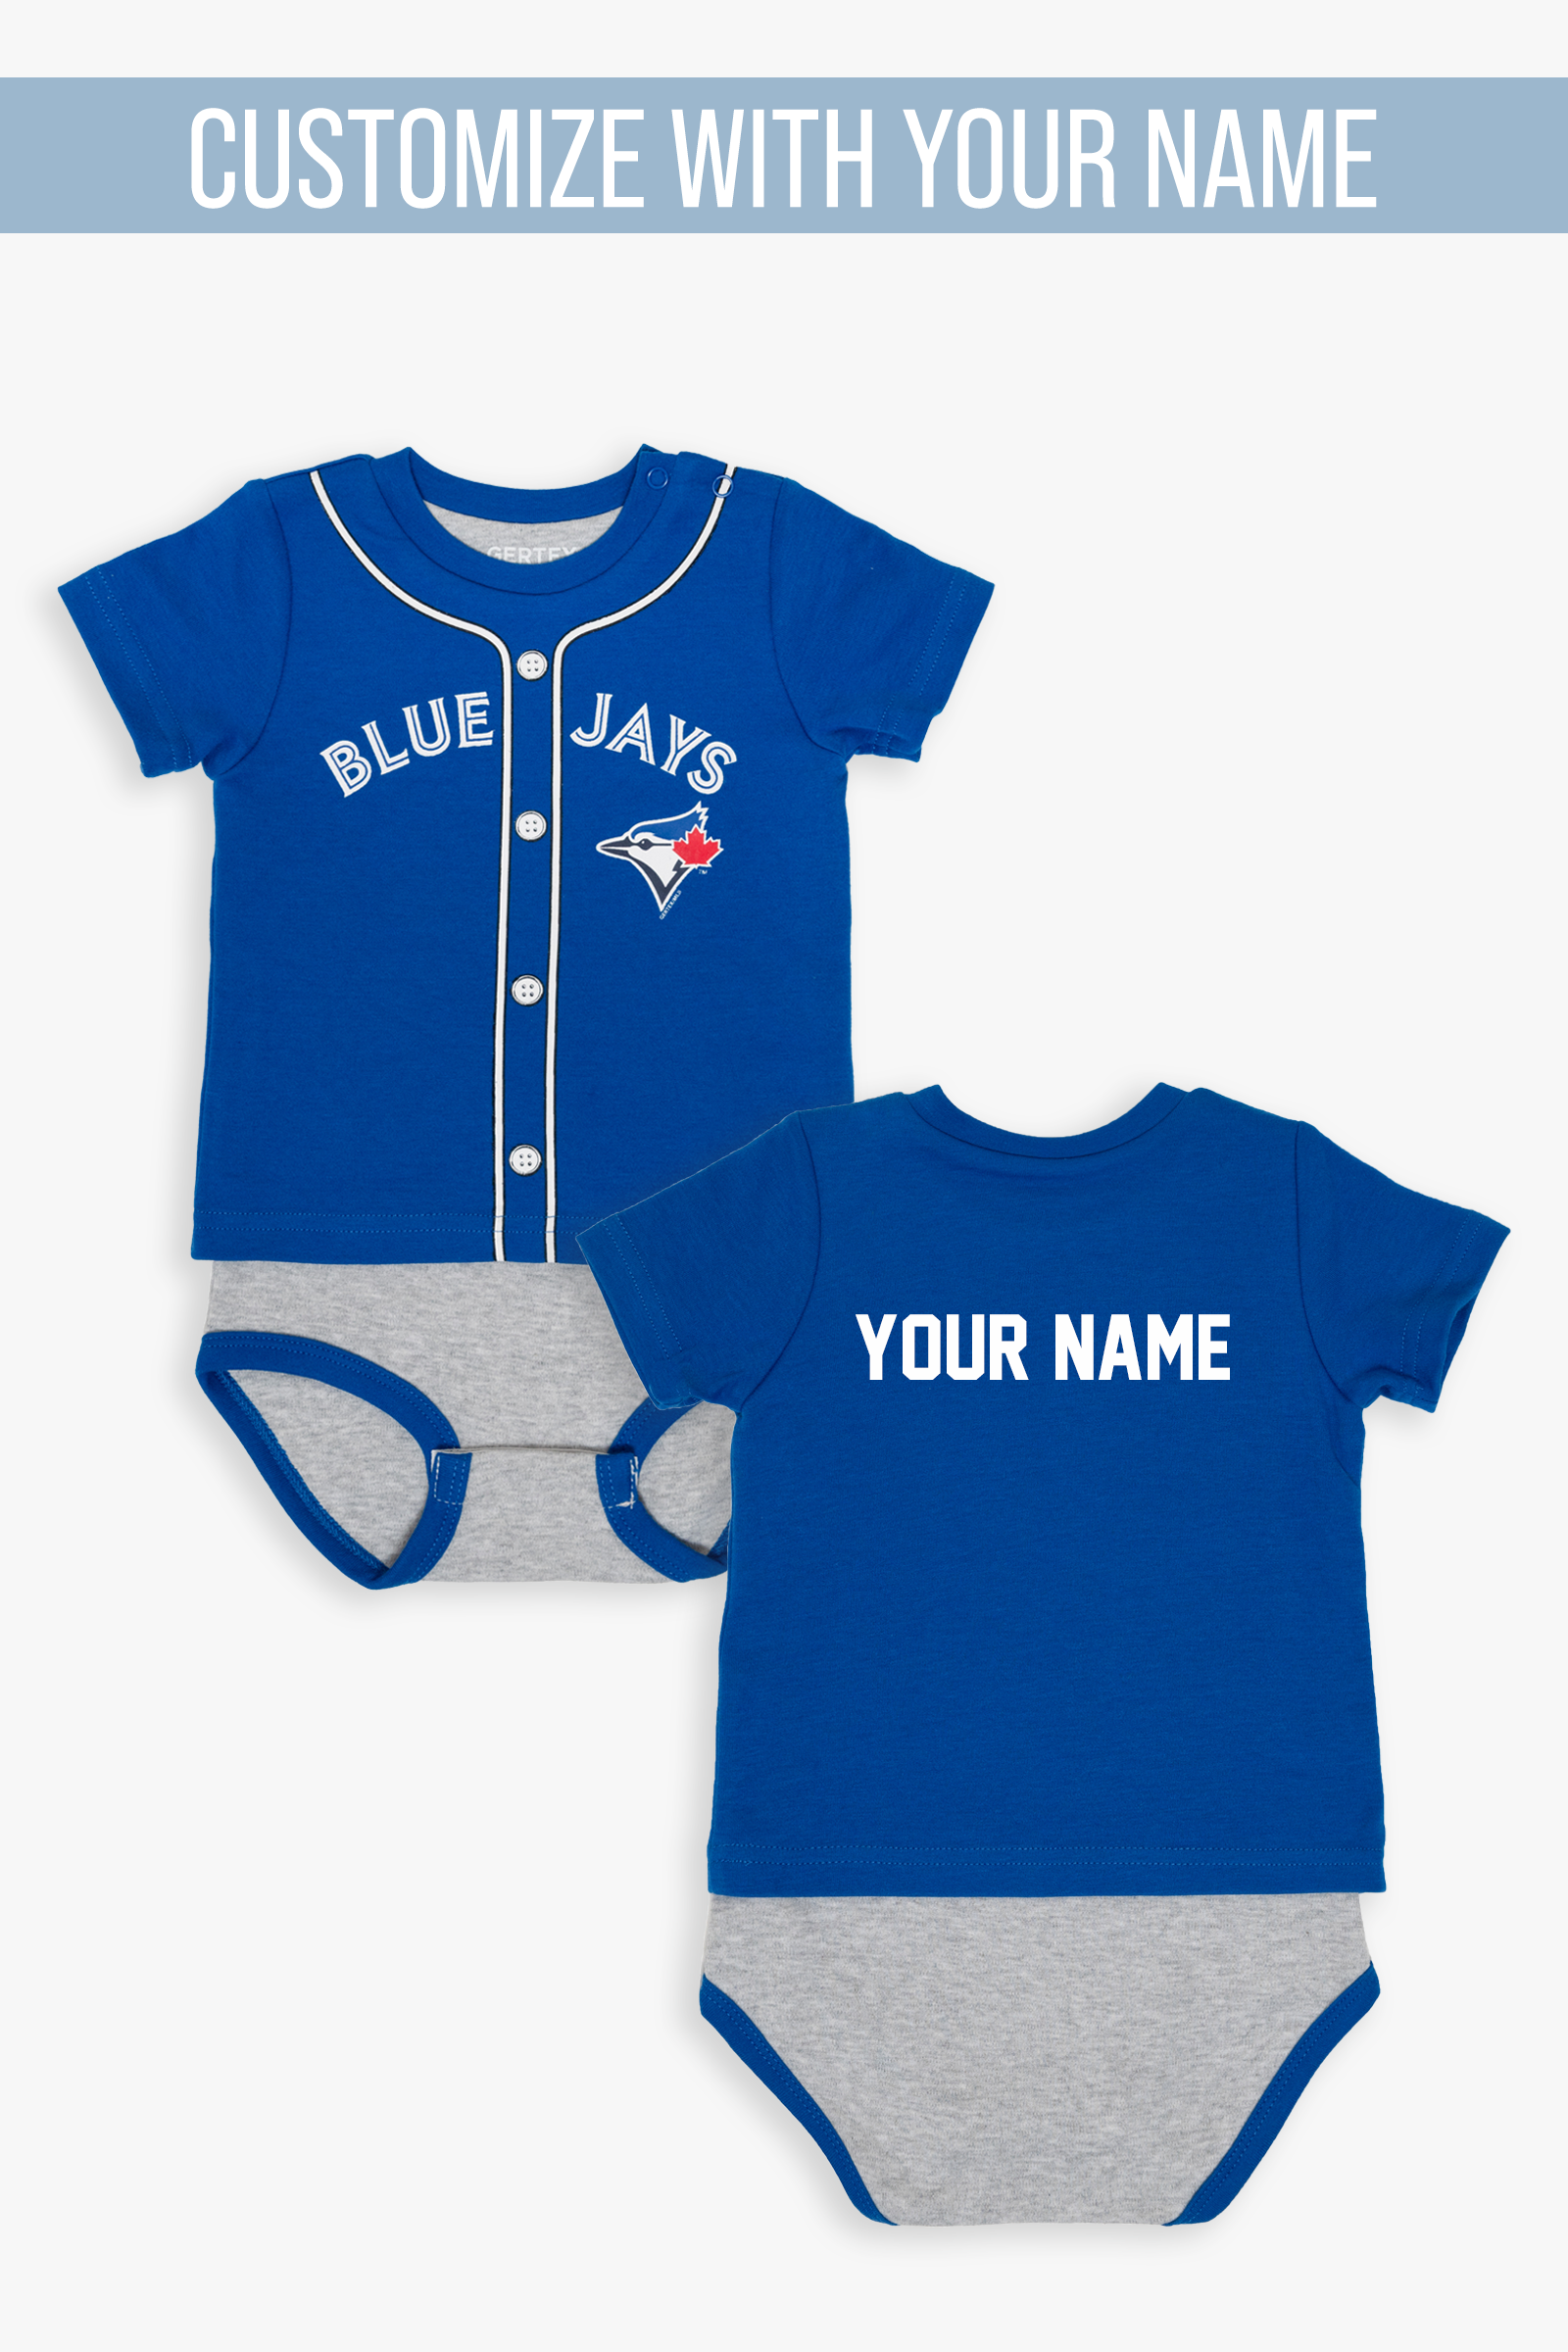 Custom Toronto Blue Jays Jerseys, Customized Blue Jays Shirts